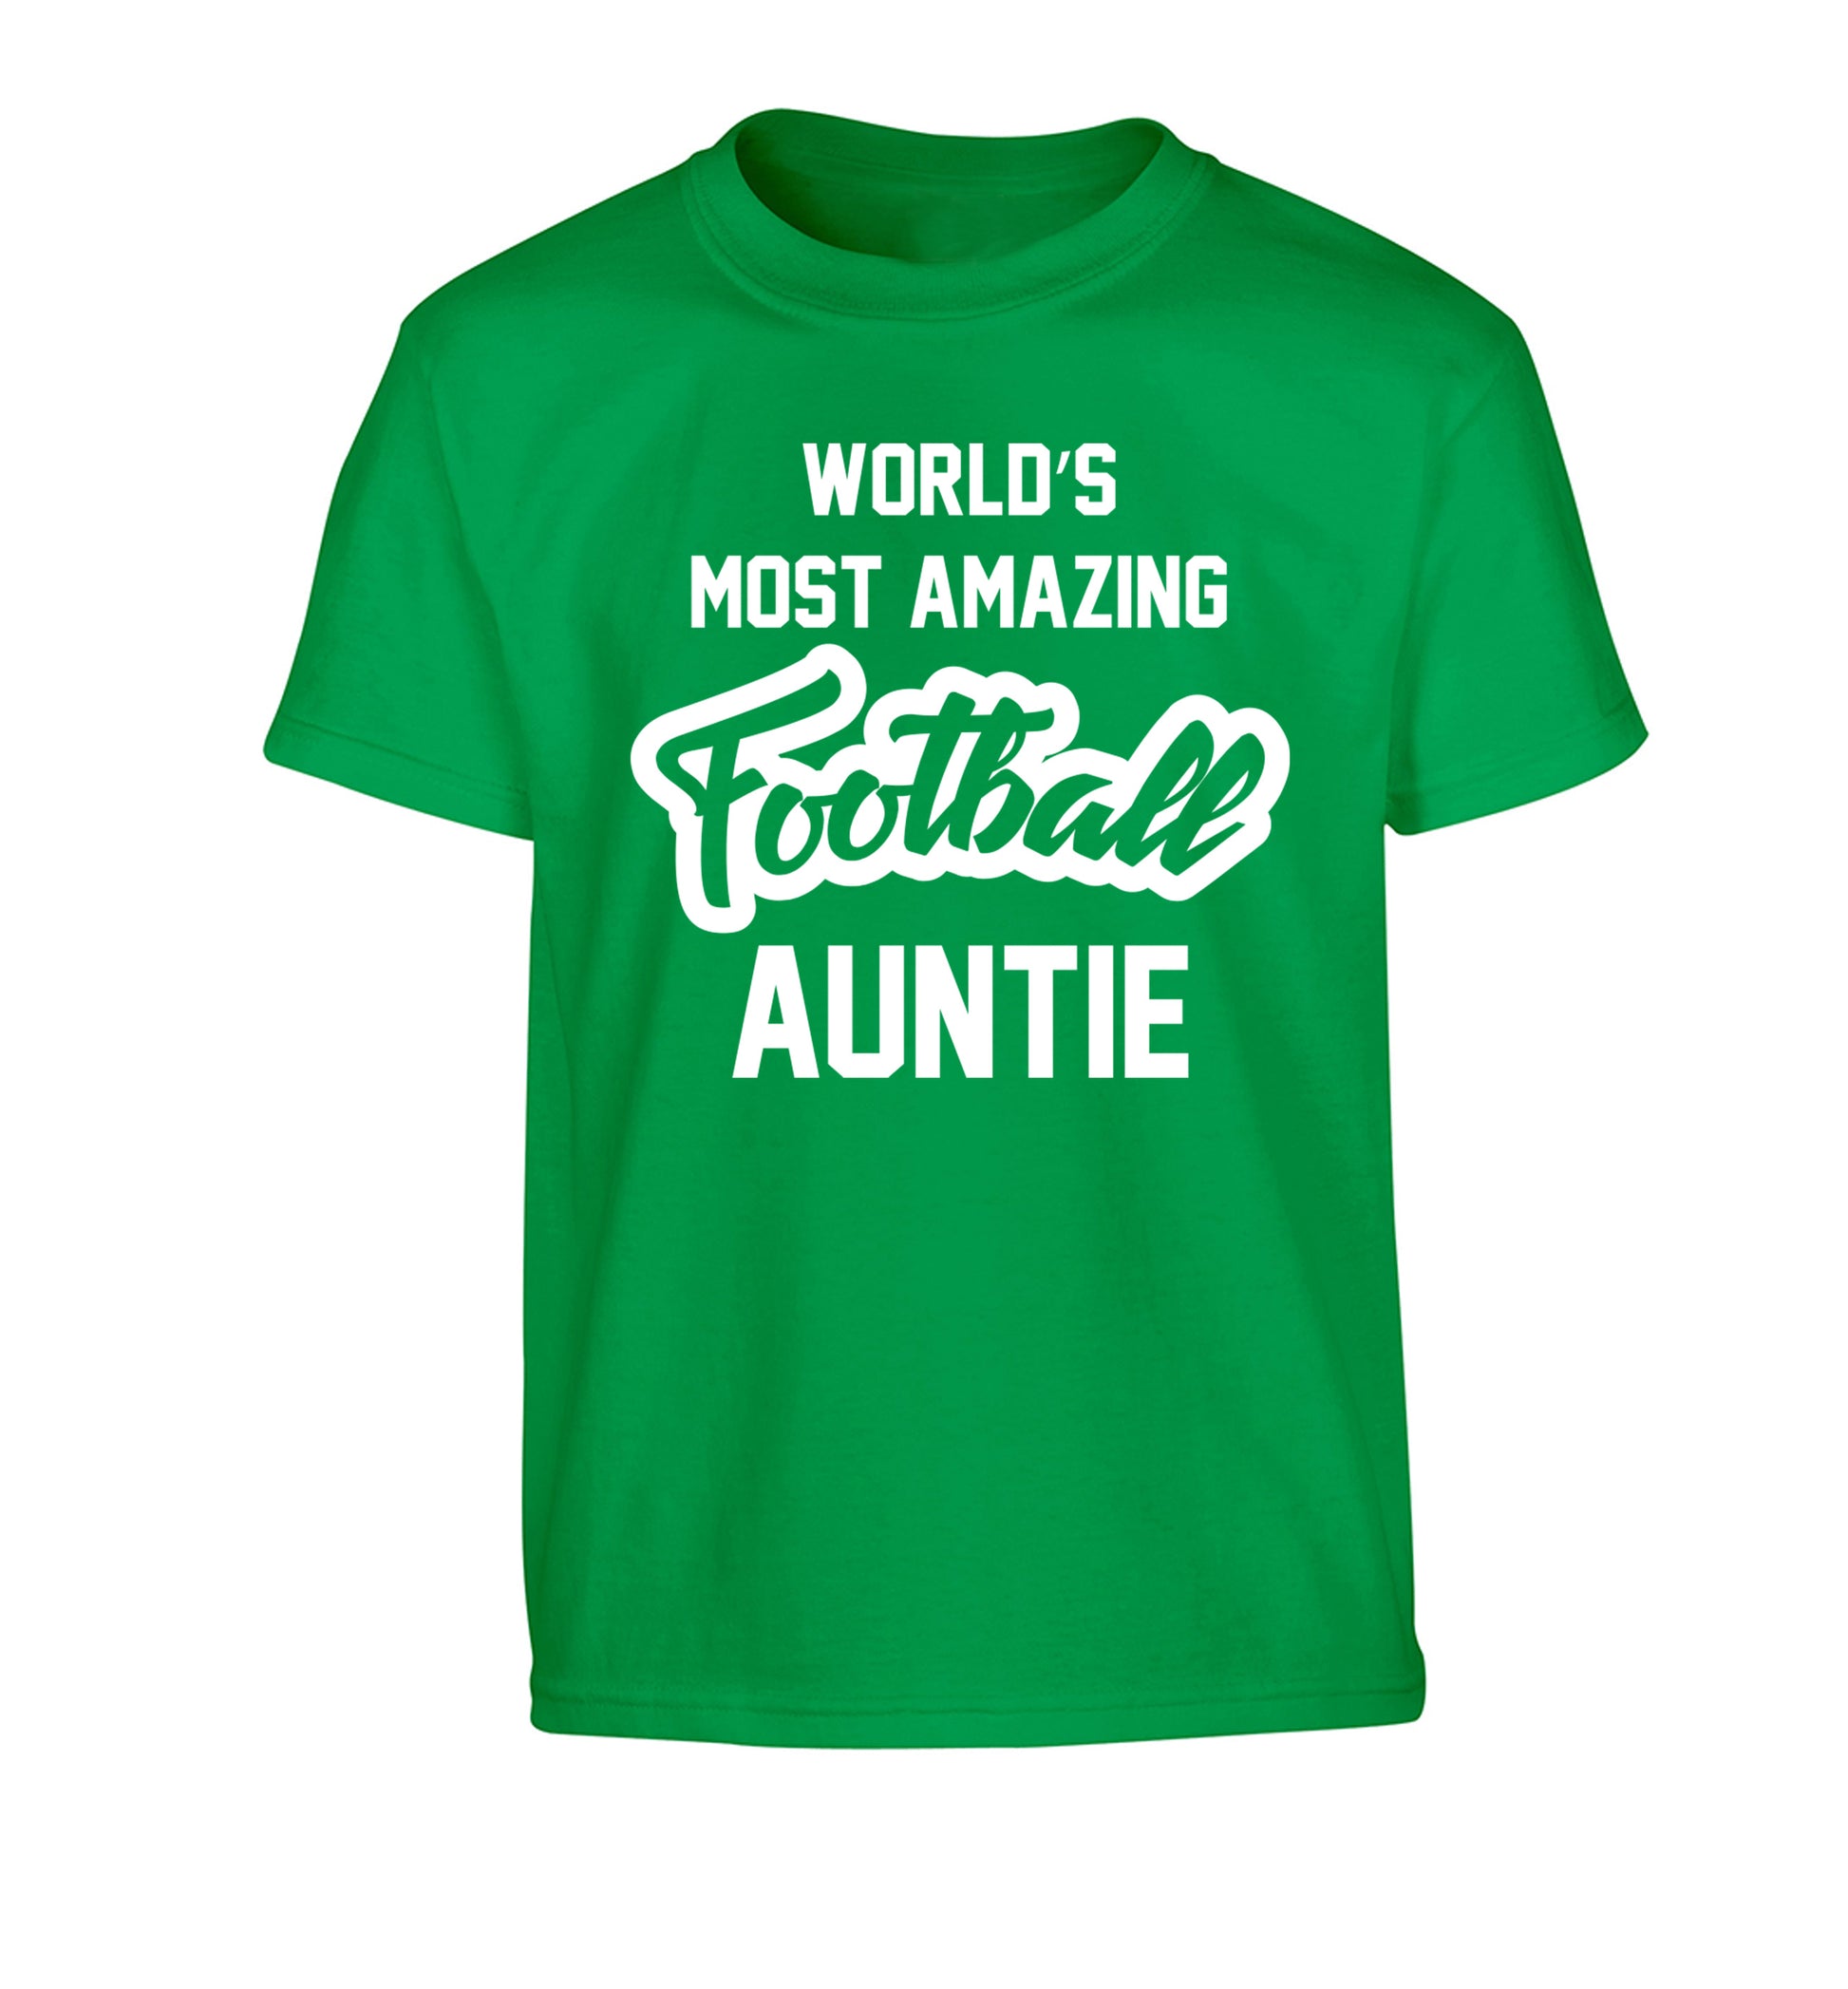 Worlds most amazing football auntie Children's green Tshirt 12-14 Years